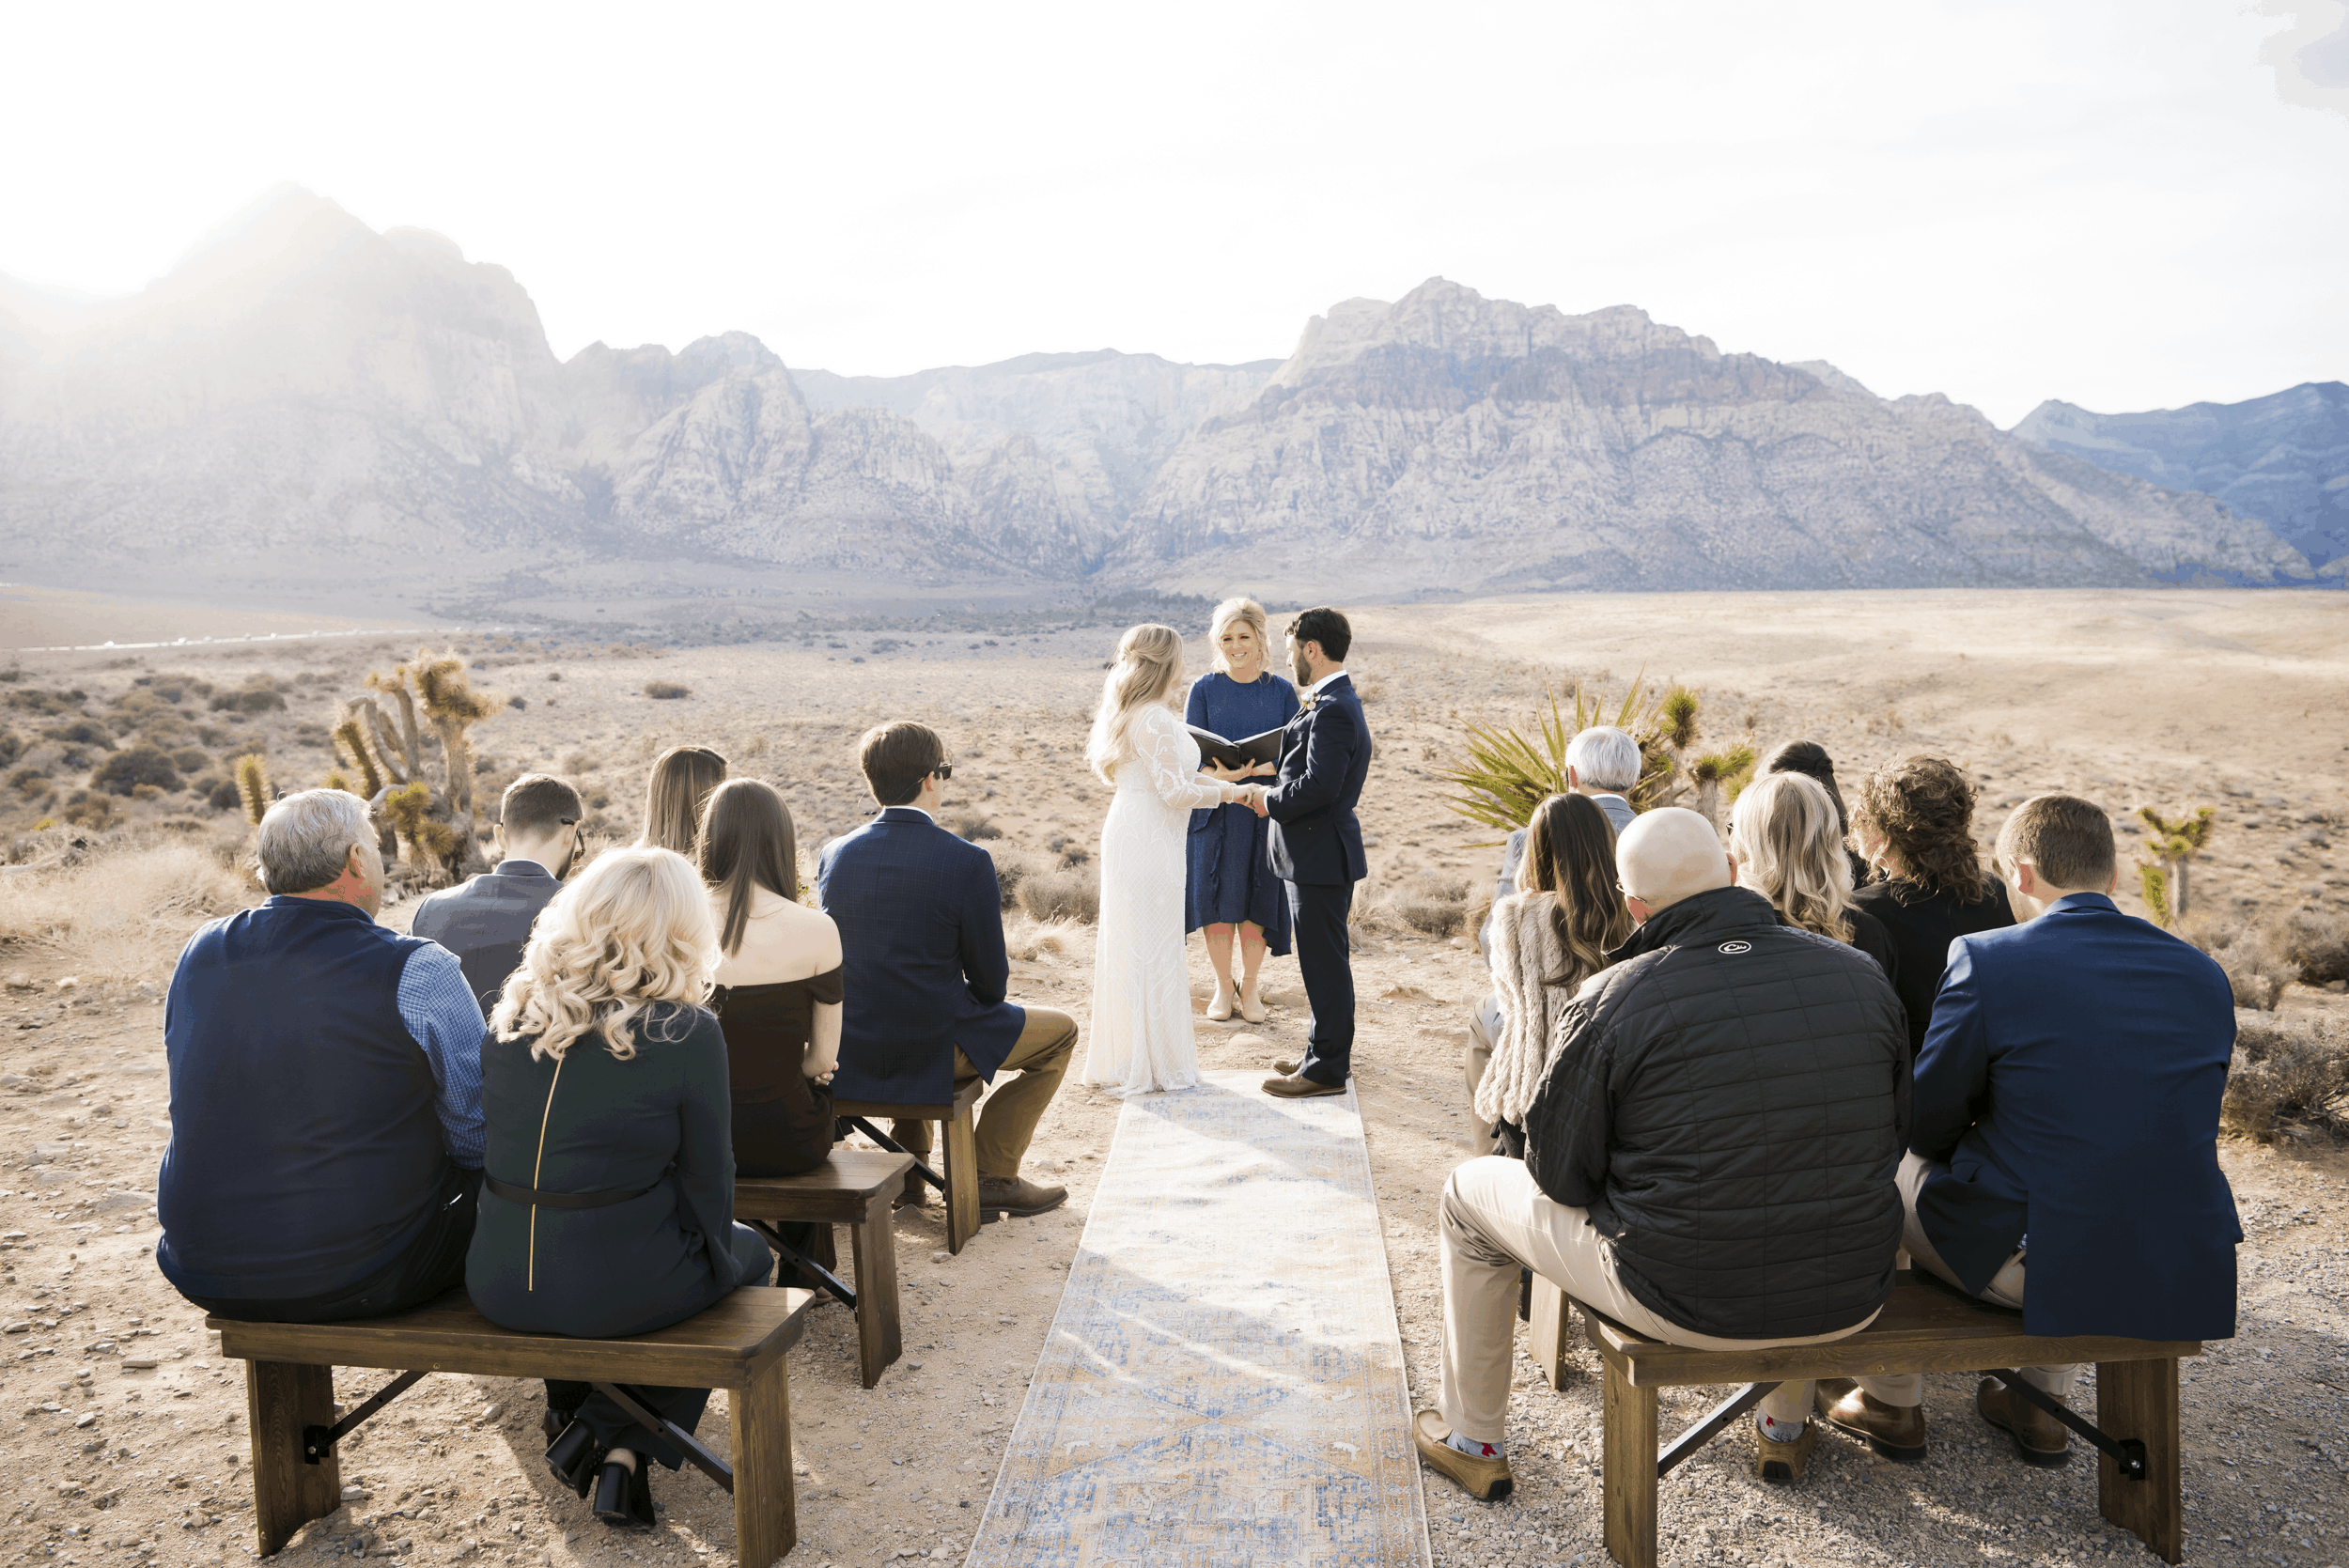 Micro wedding at Red Rock Canyon in Las Vegas.